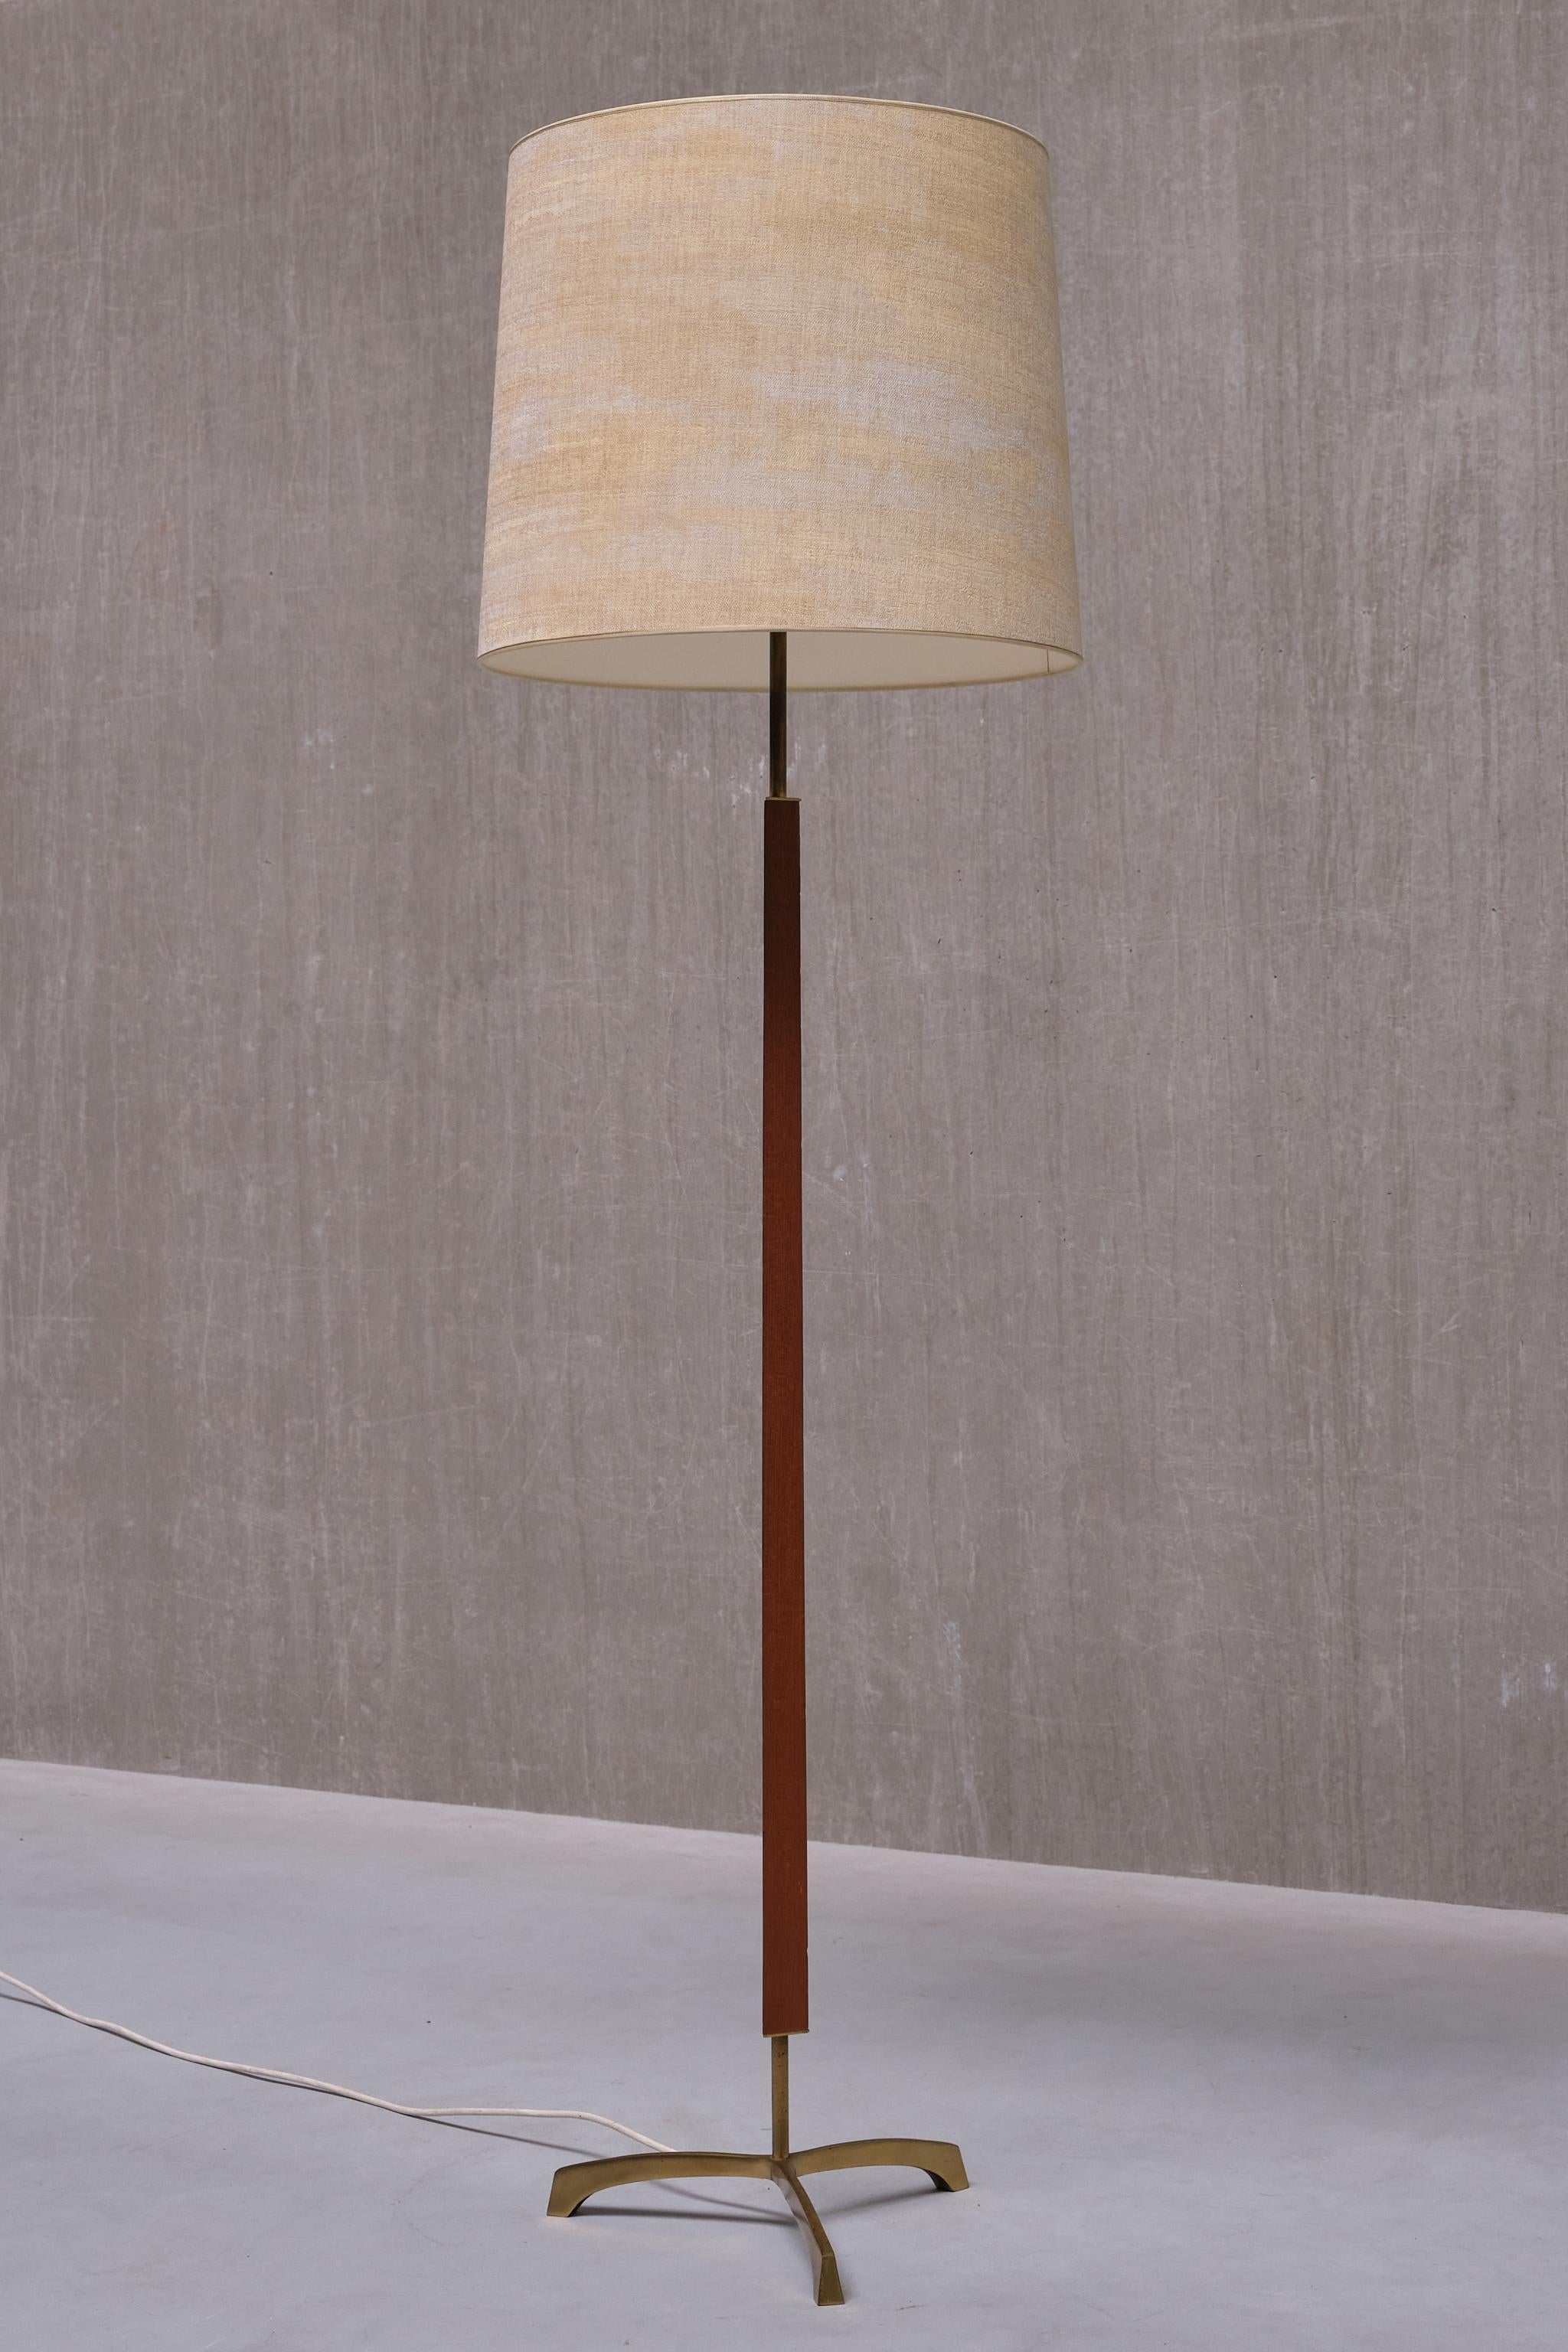 Mid-20th Century Danish Modern Three Legged Floor Lamp in Brass, Teak and Textured Shade, 1950s For Sale